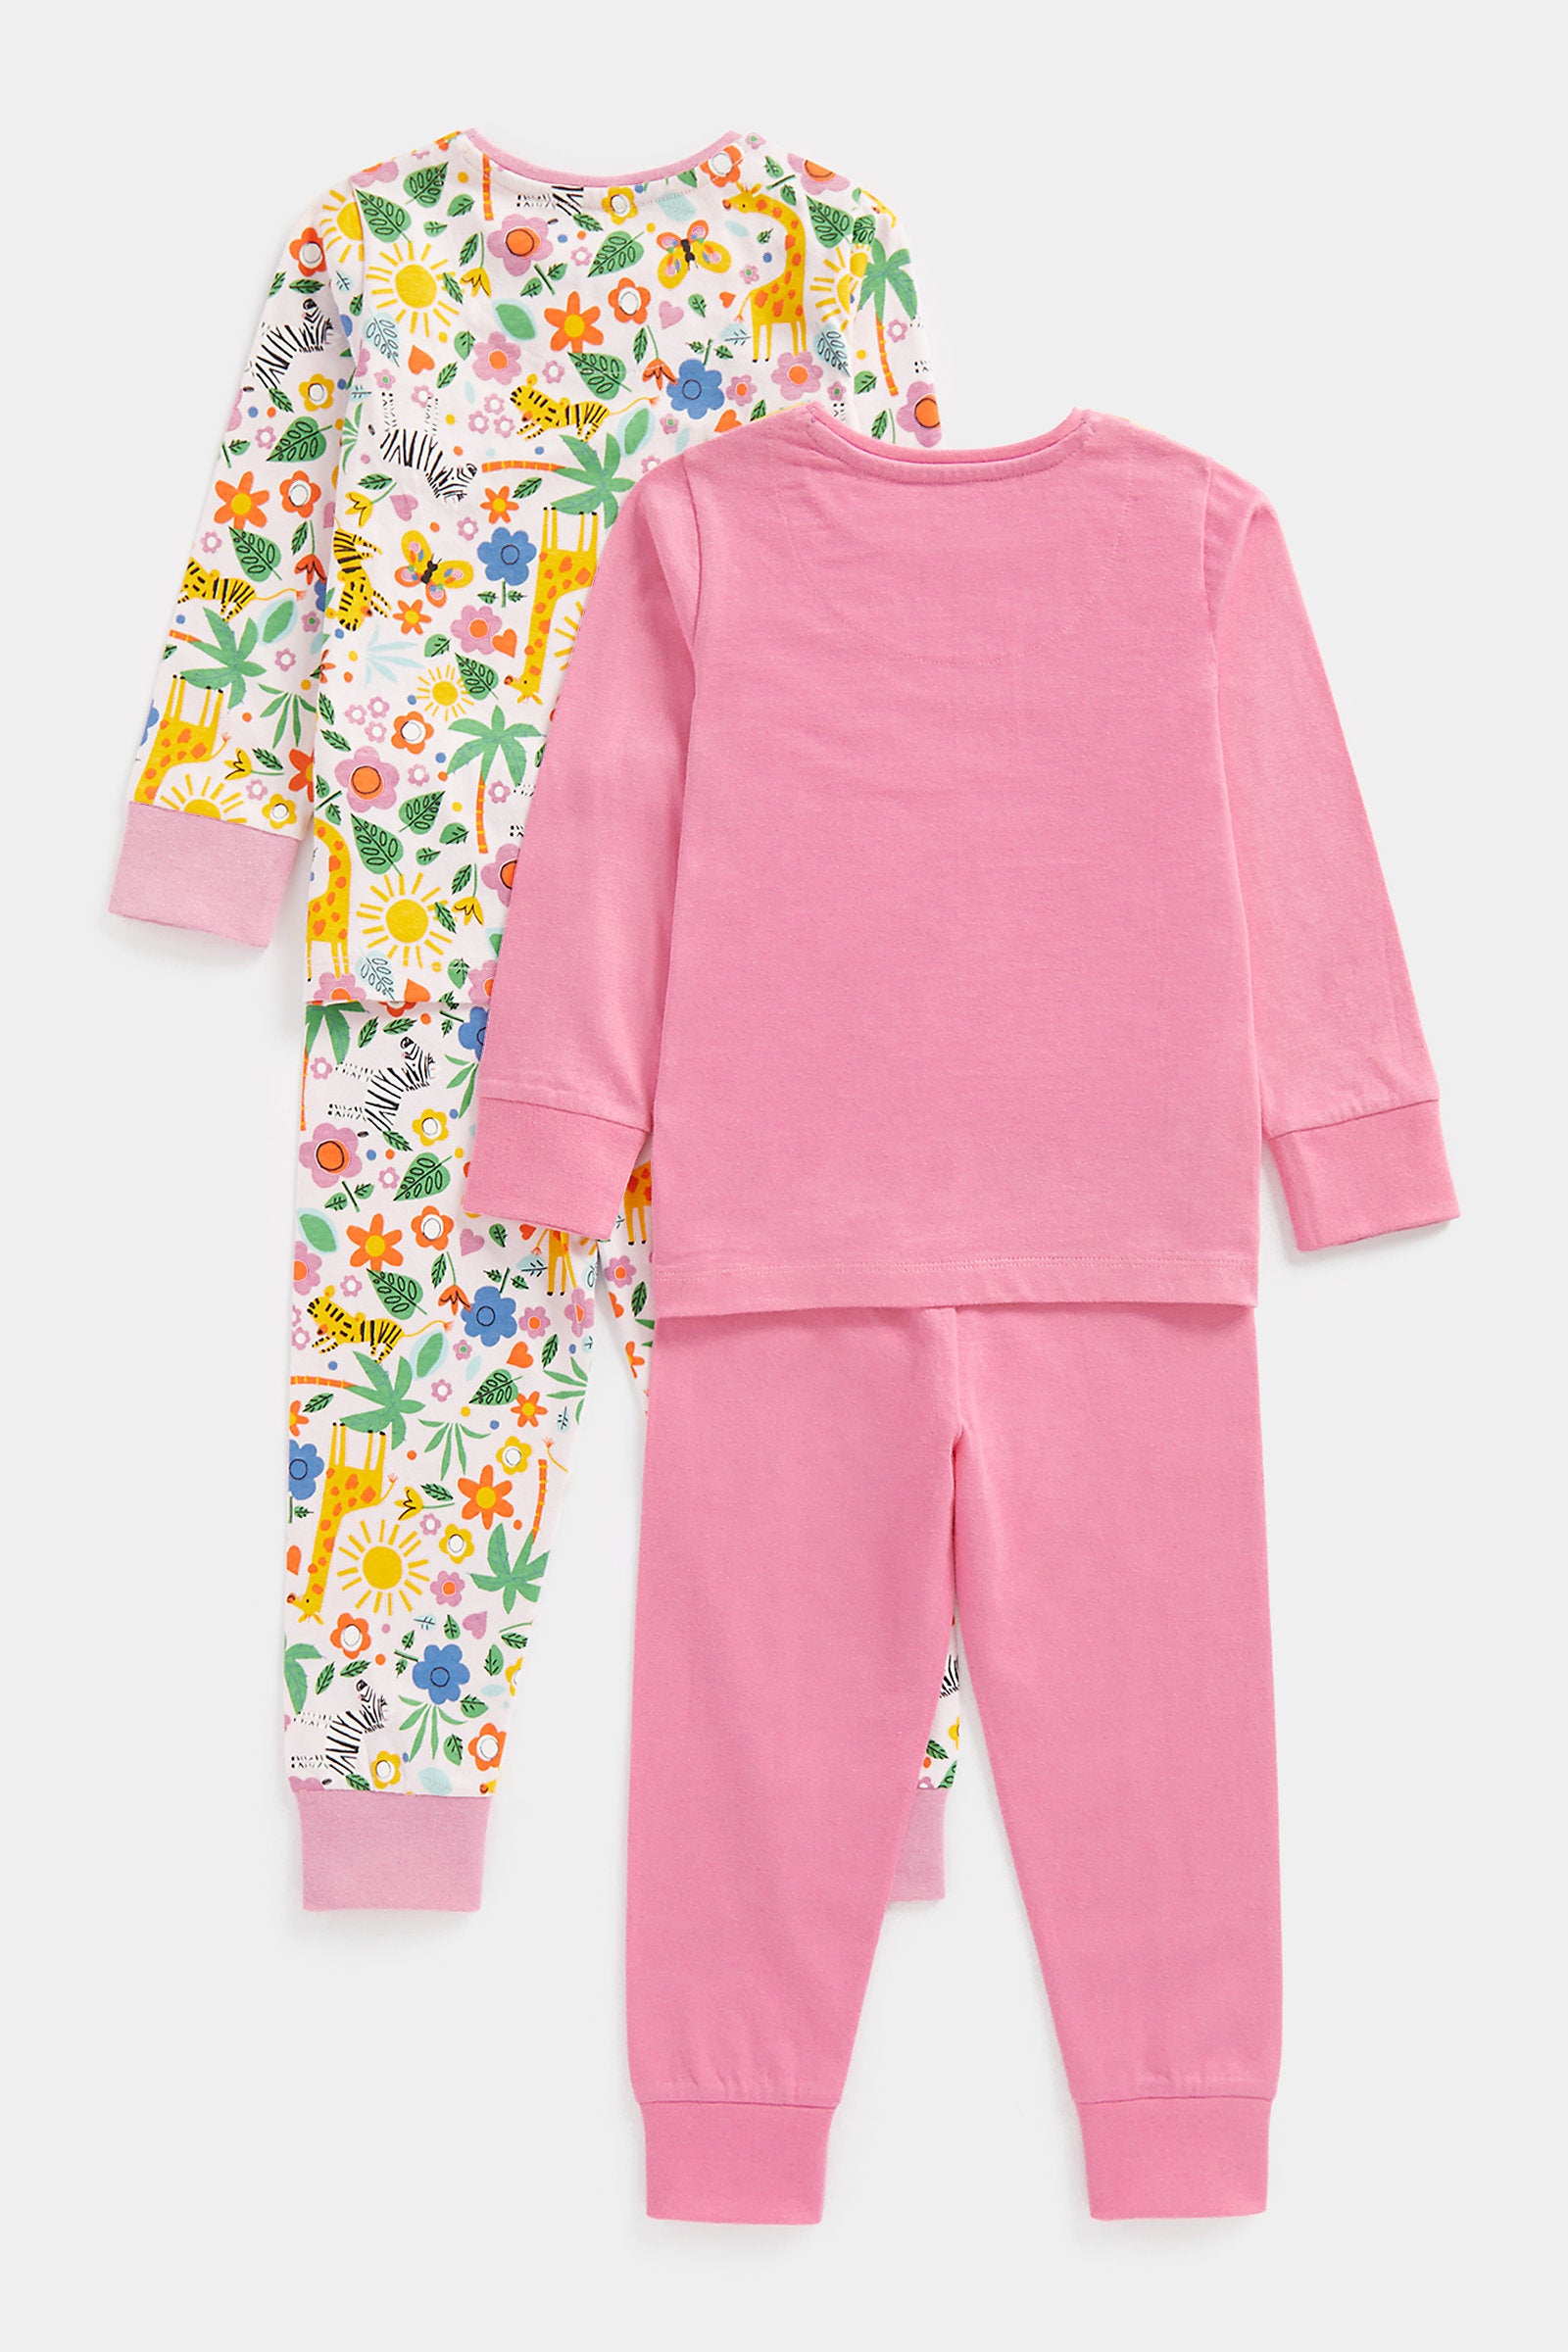 Mothercare Giraffe Pyjamas - 2 Pack